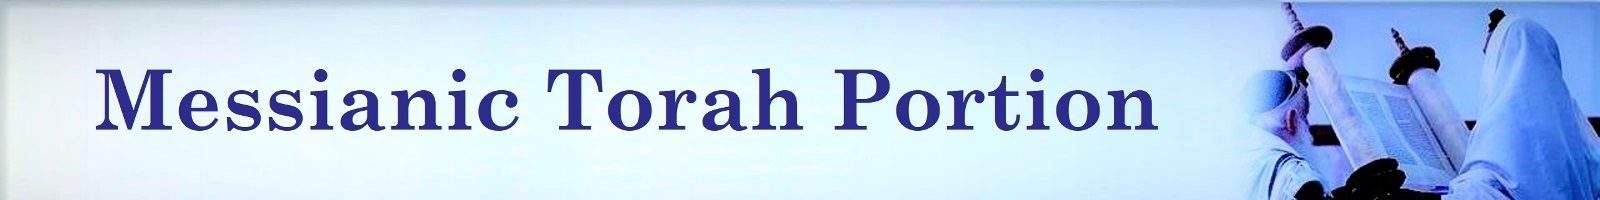 Messianic Torah Portion Header